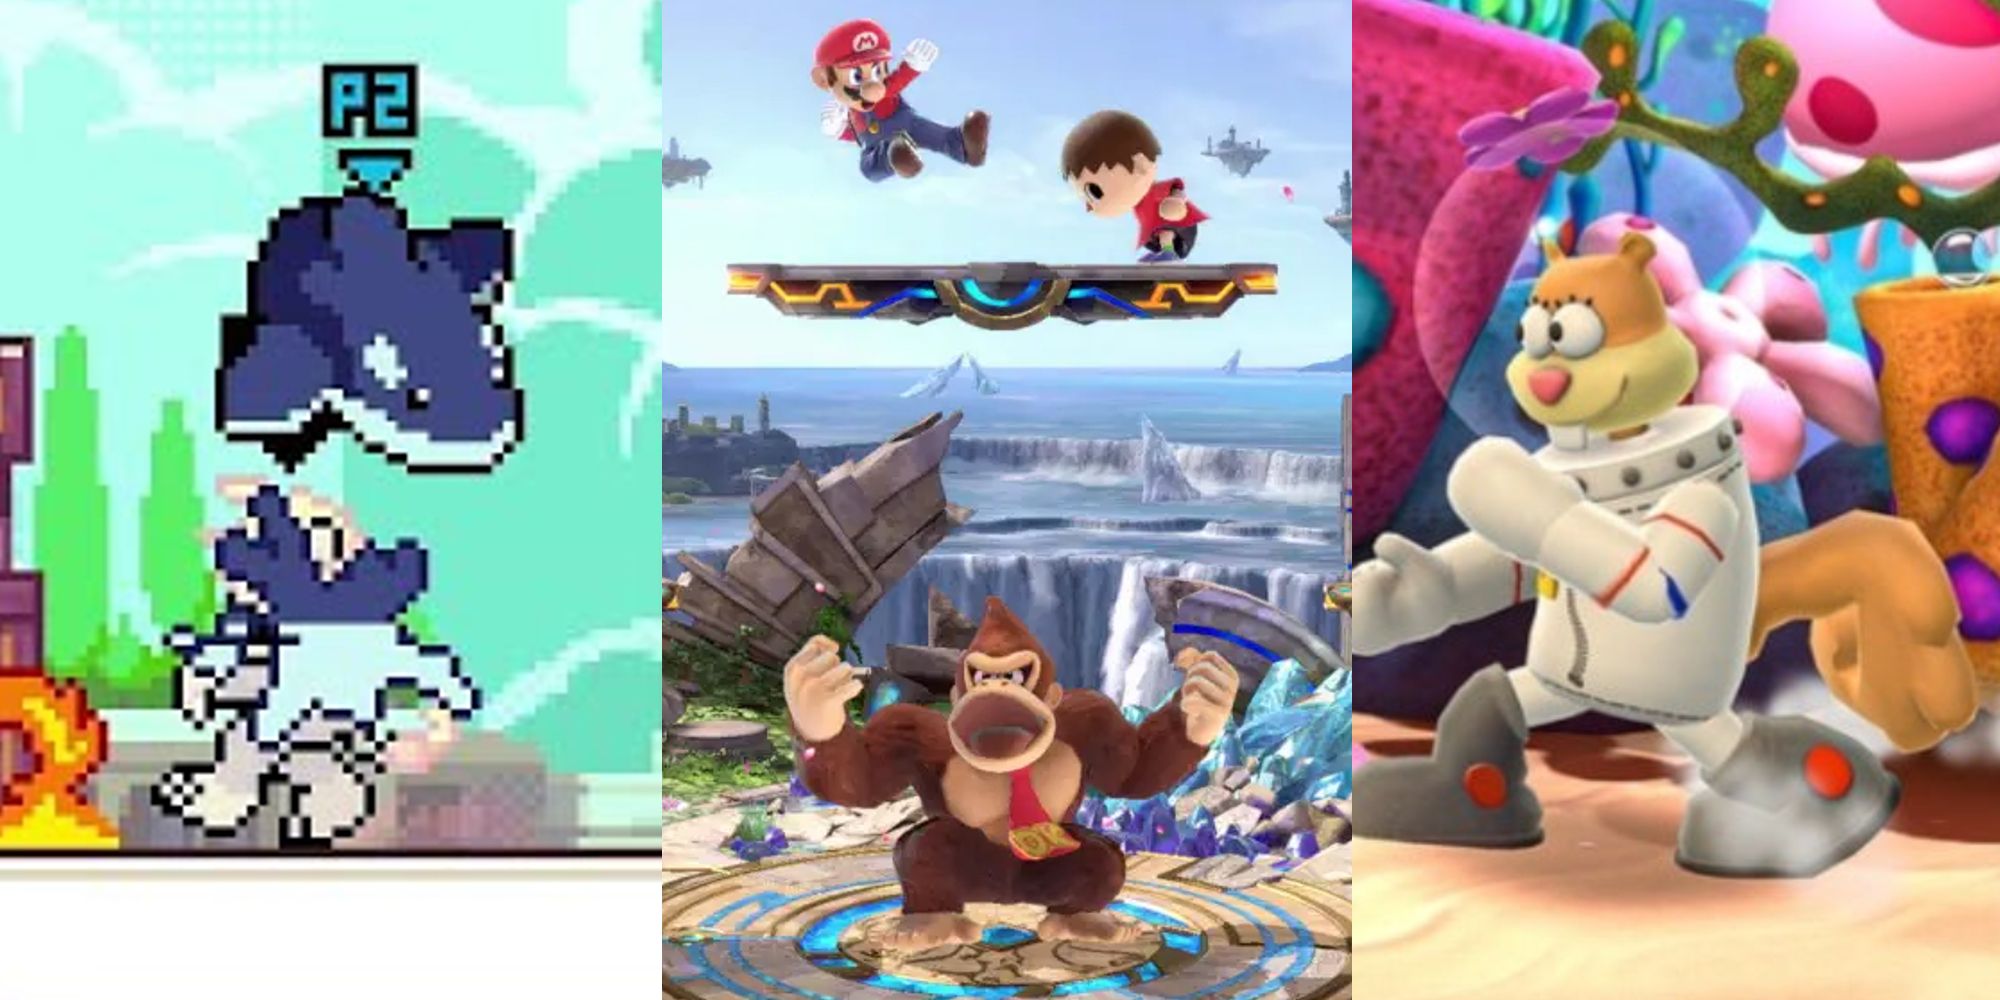 Orcane fighting Zetterburn; Donkey Kong fighting Mario and Villager; Sandy Cheeks posing